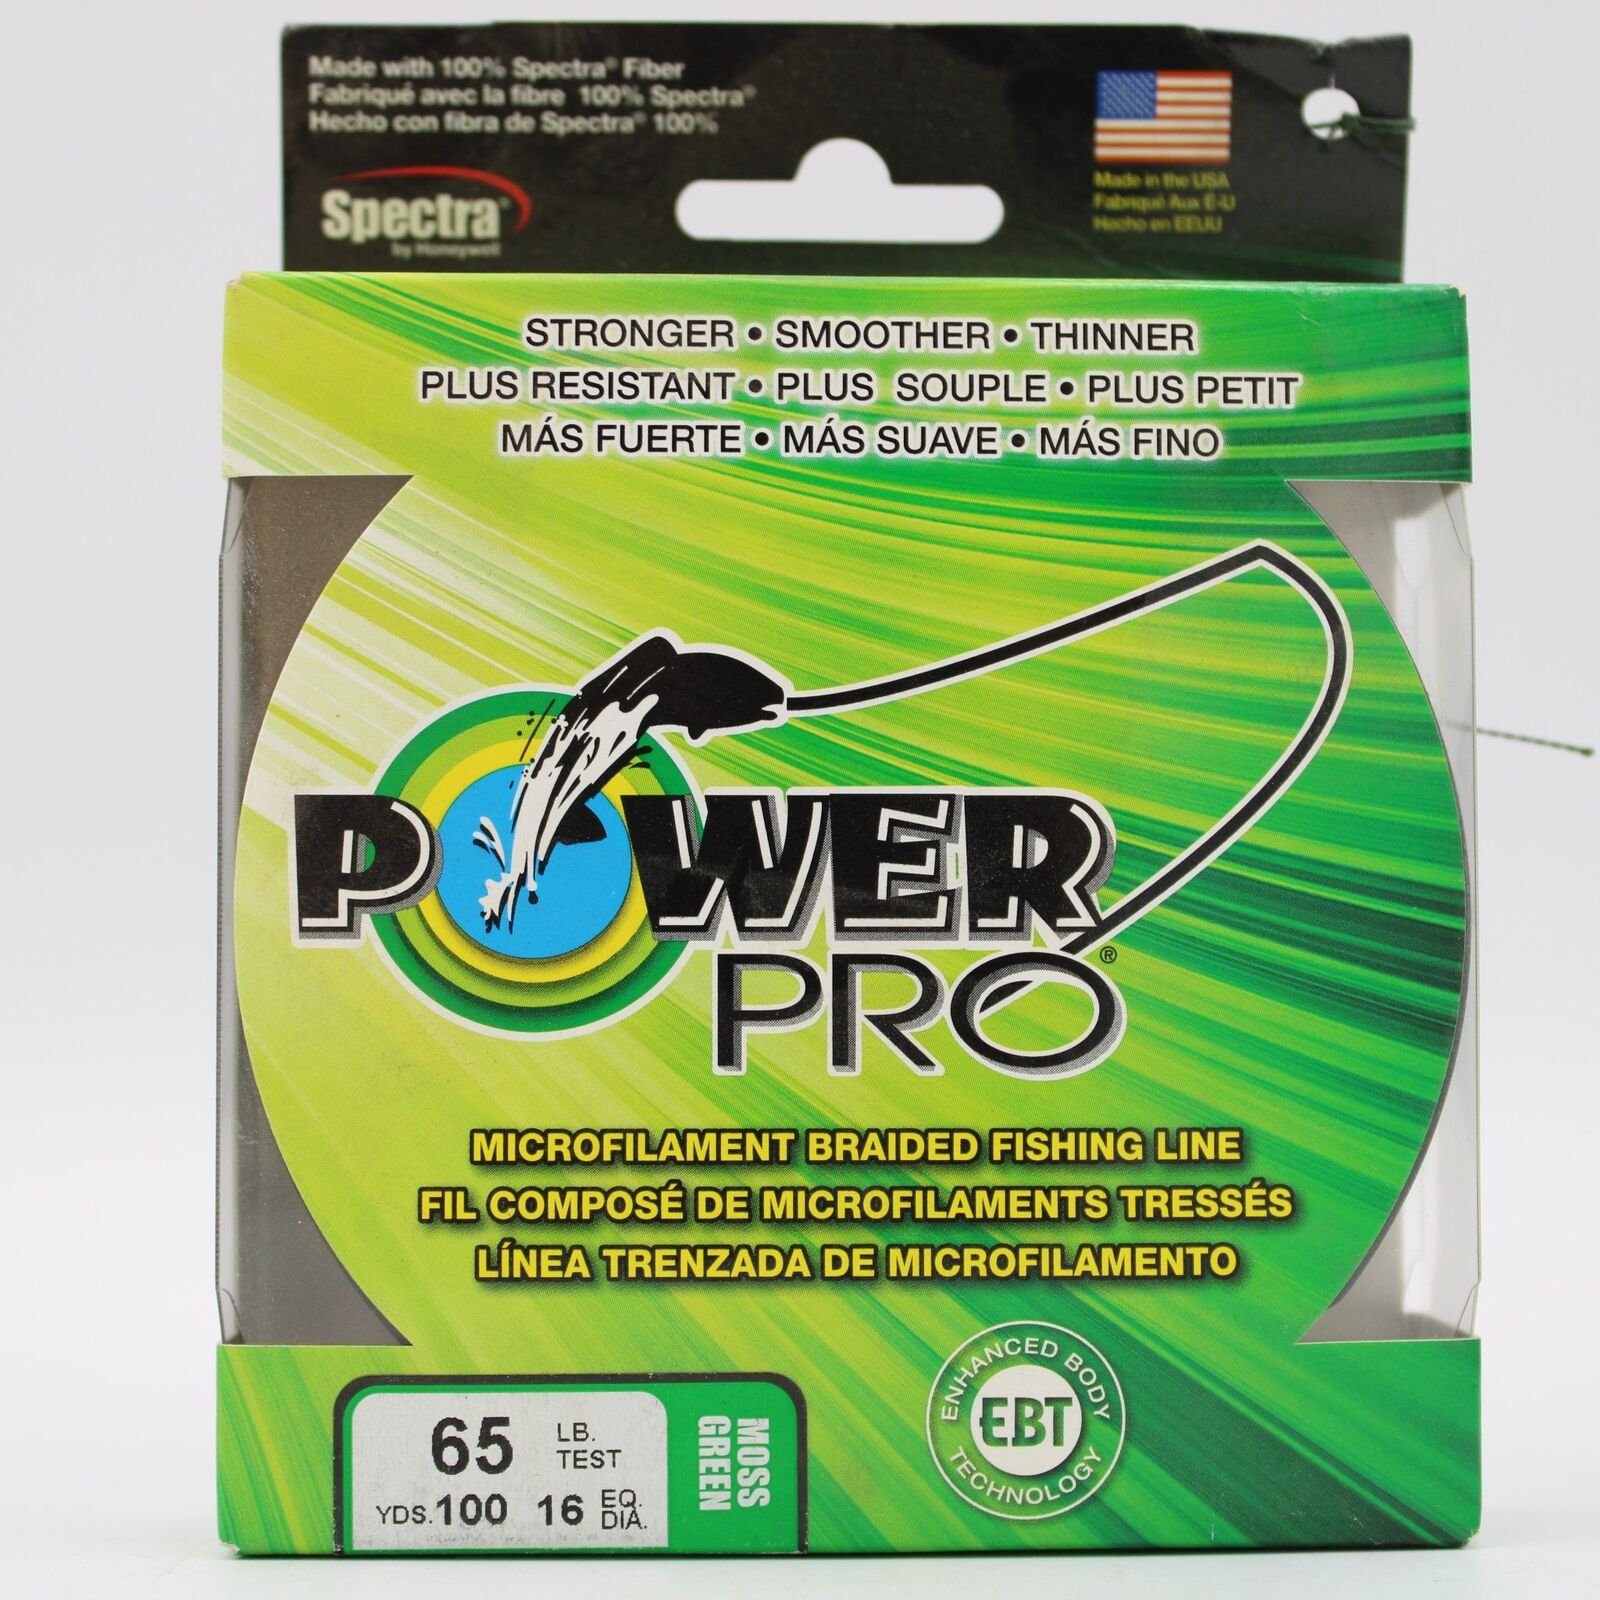 Power Pro Original 300yd Spools